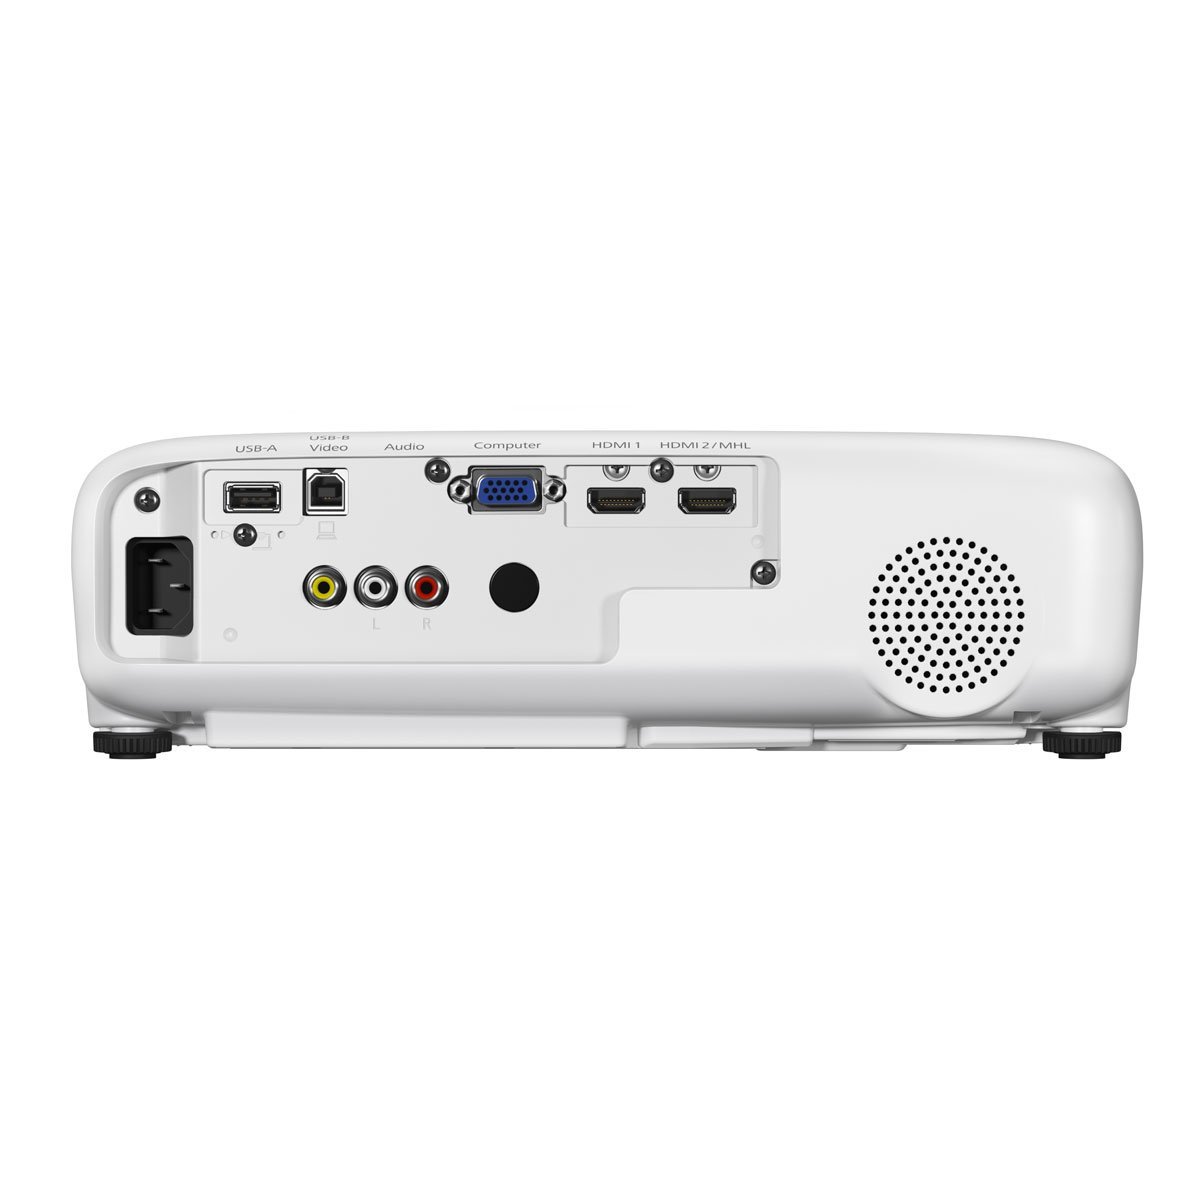 Videoproyector Powerlite U42+ Epson